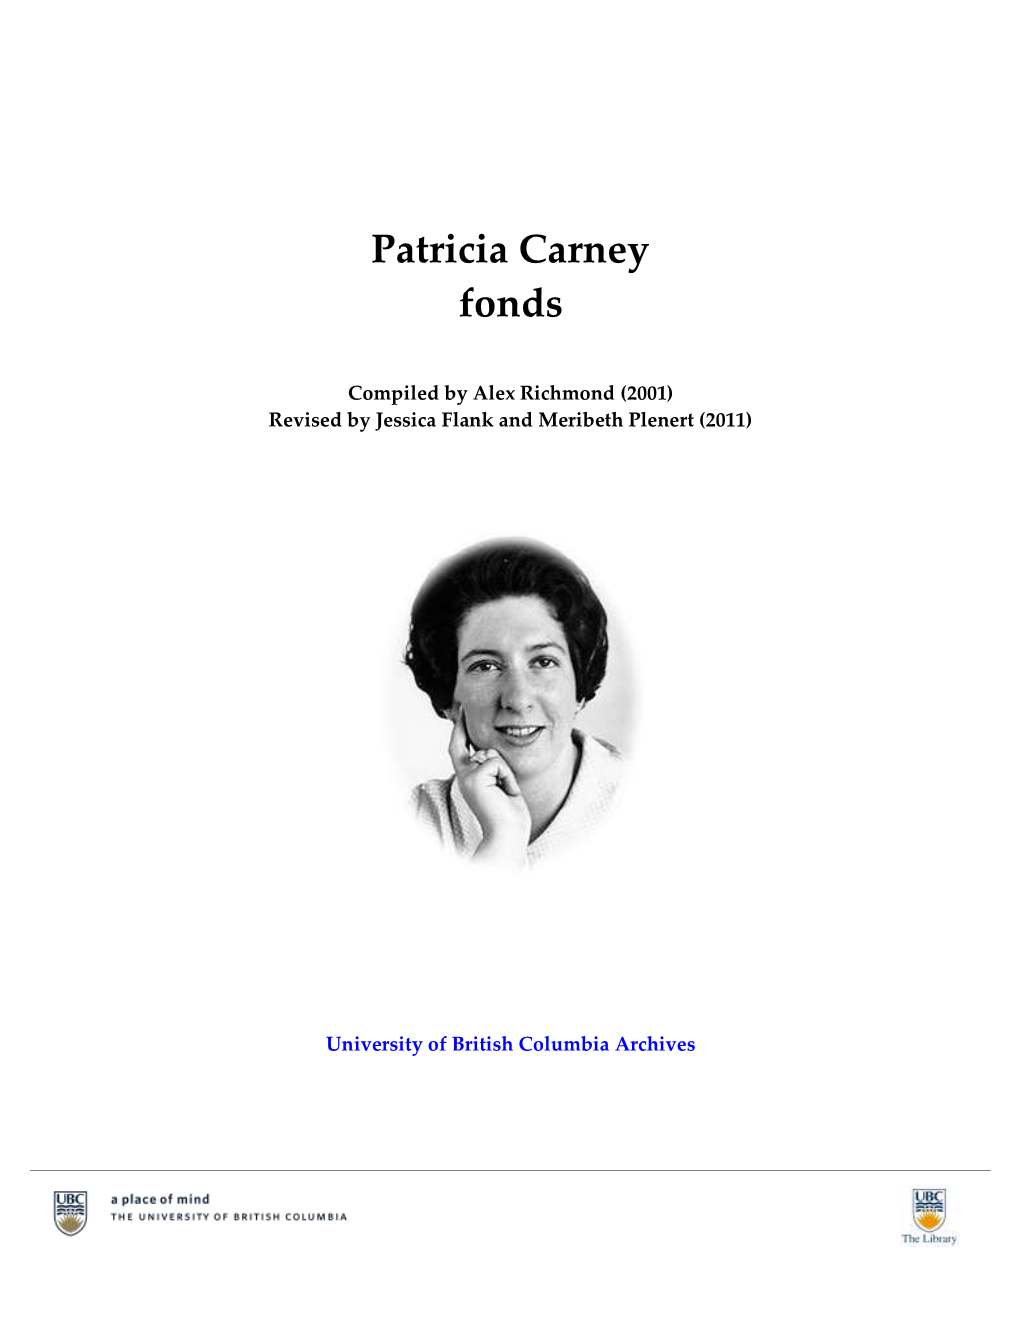 Patricia Carney Fonds